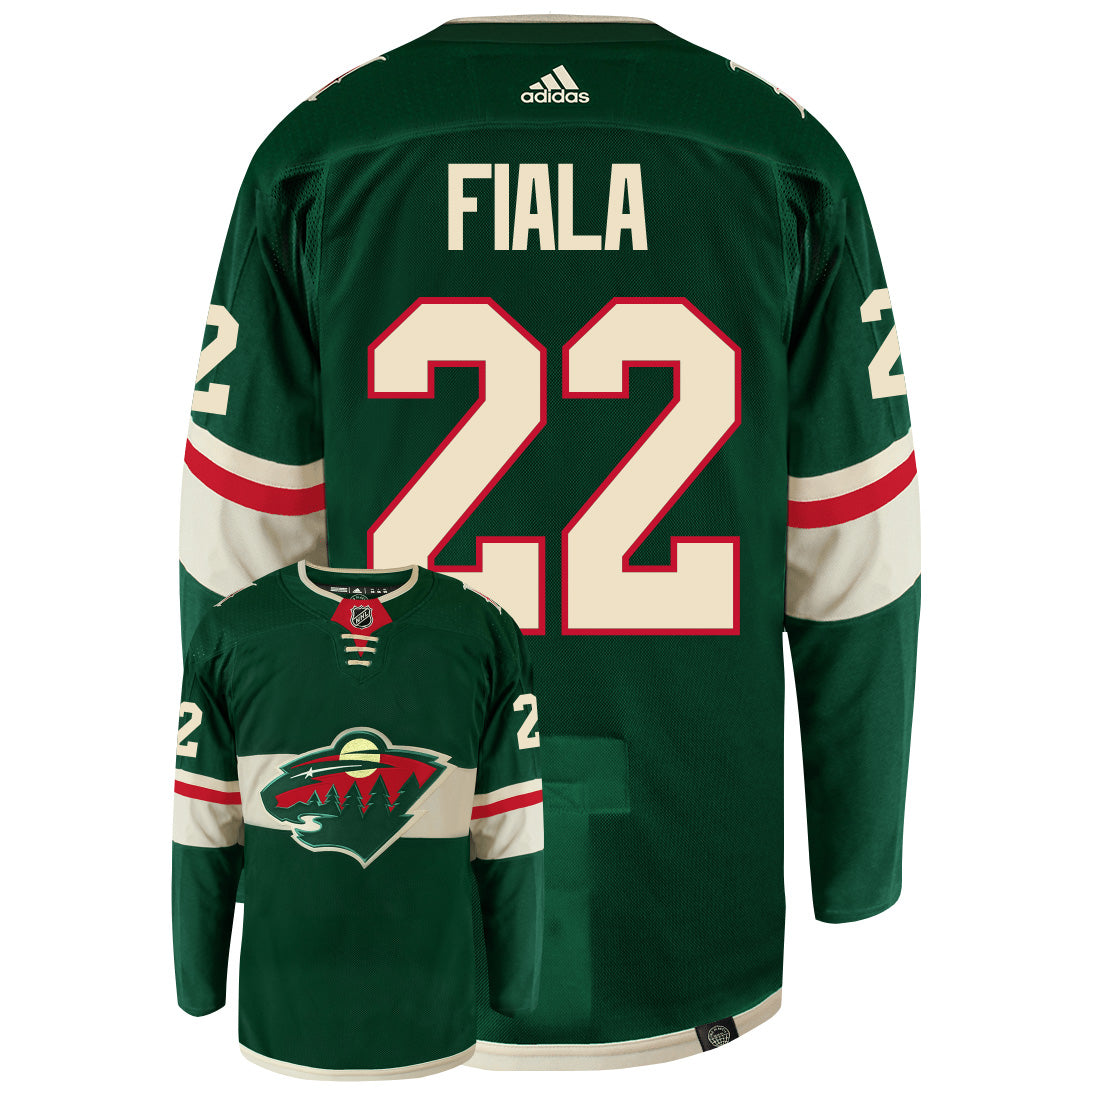 Kevin Fiala Minnesota Wild Adidas Primegreen Authentic NHL Hockey Jersey - Back/Front View